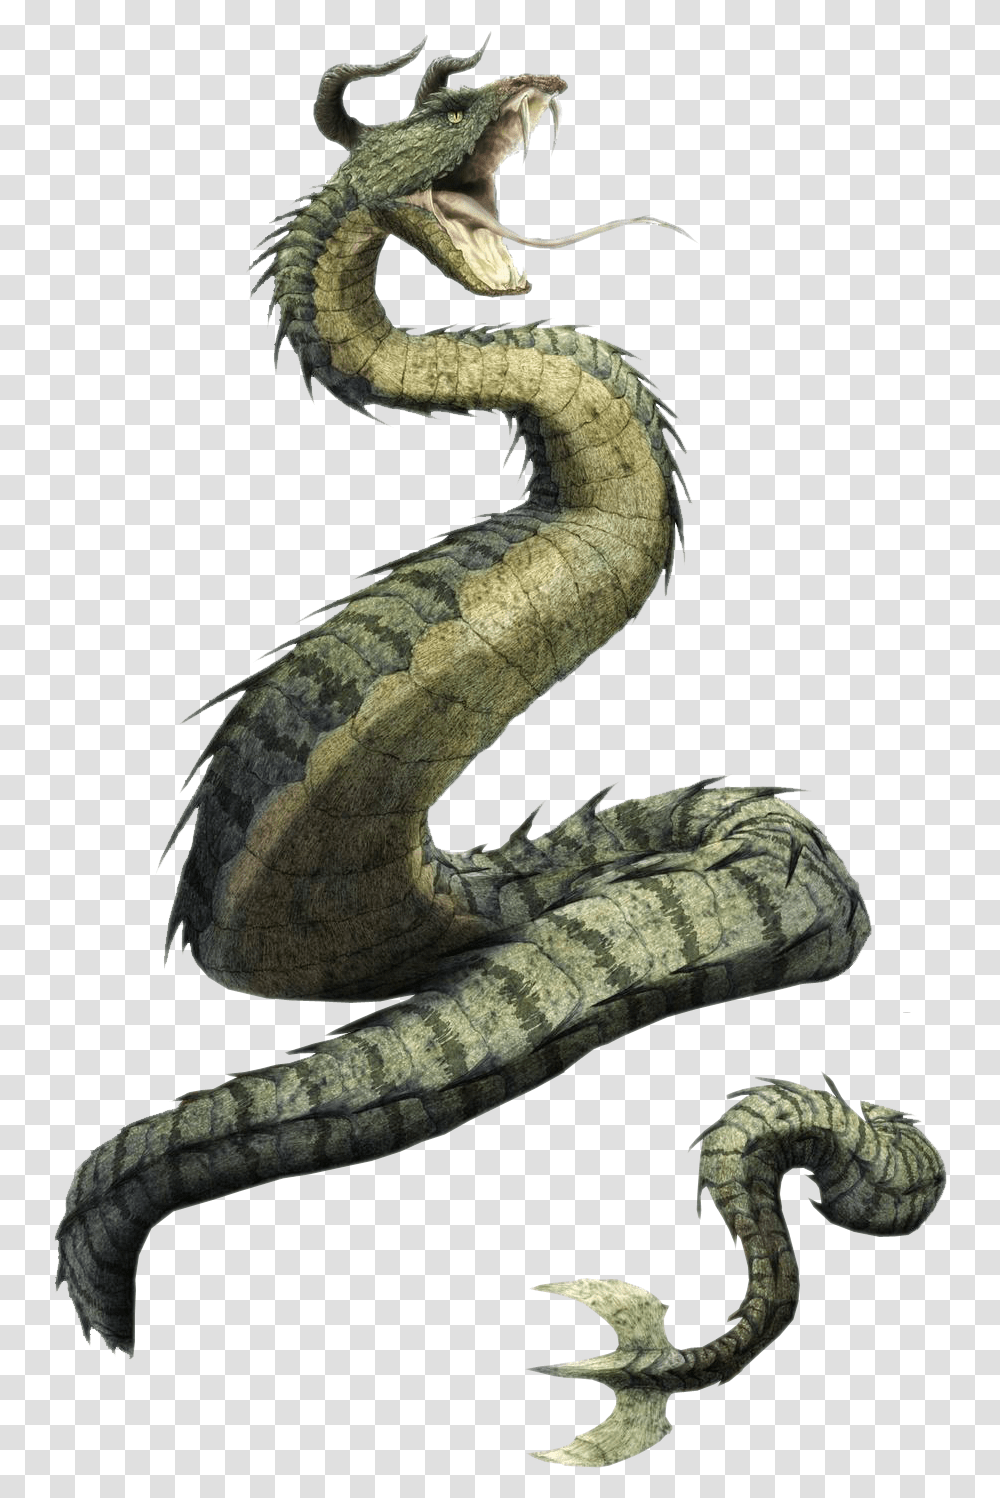 Serpent 3 Image Dragon Blade Wrath Of Fire, Reptile, Animal, Snake, Rattlesnake Transparent Png